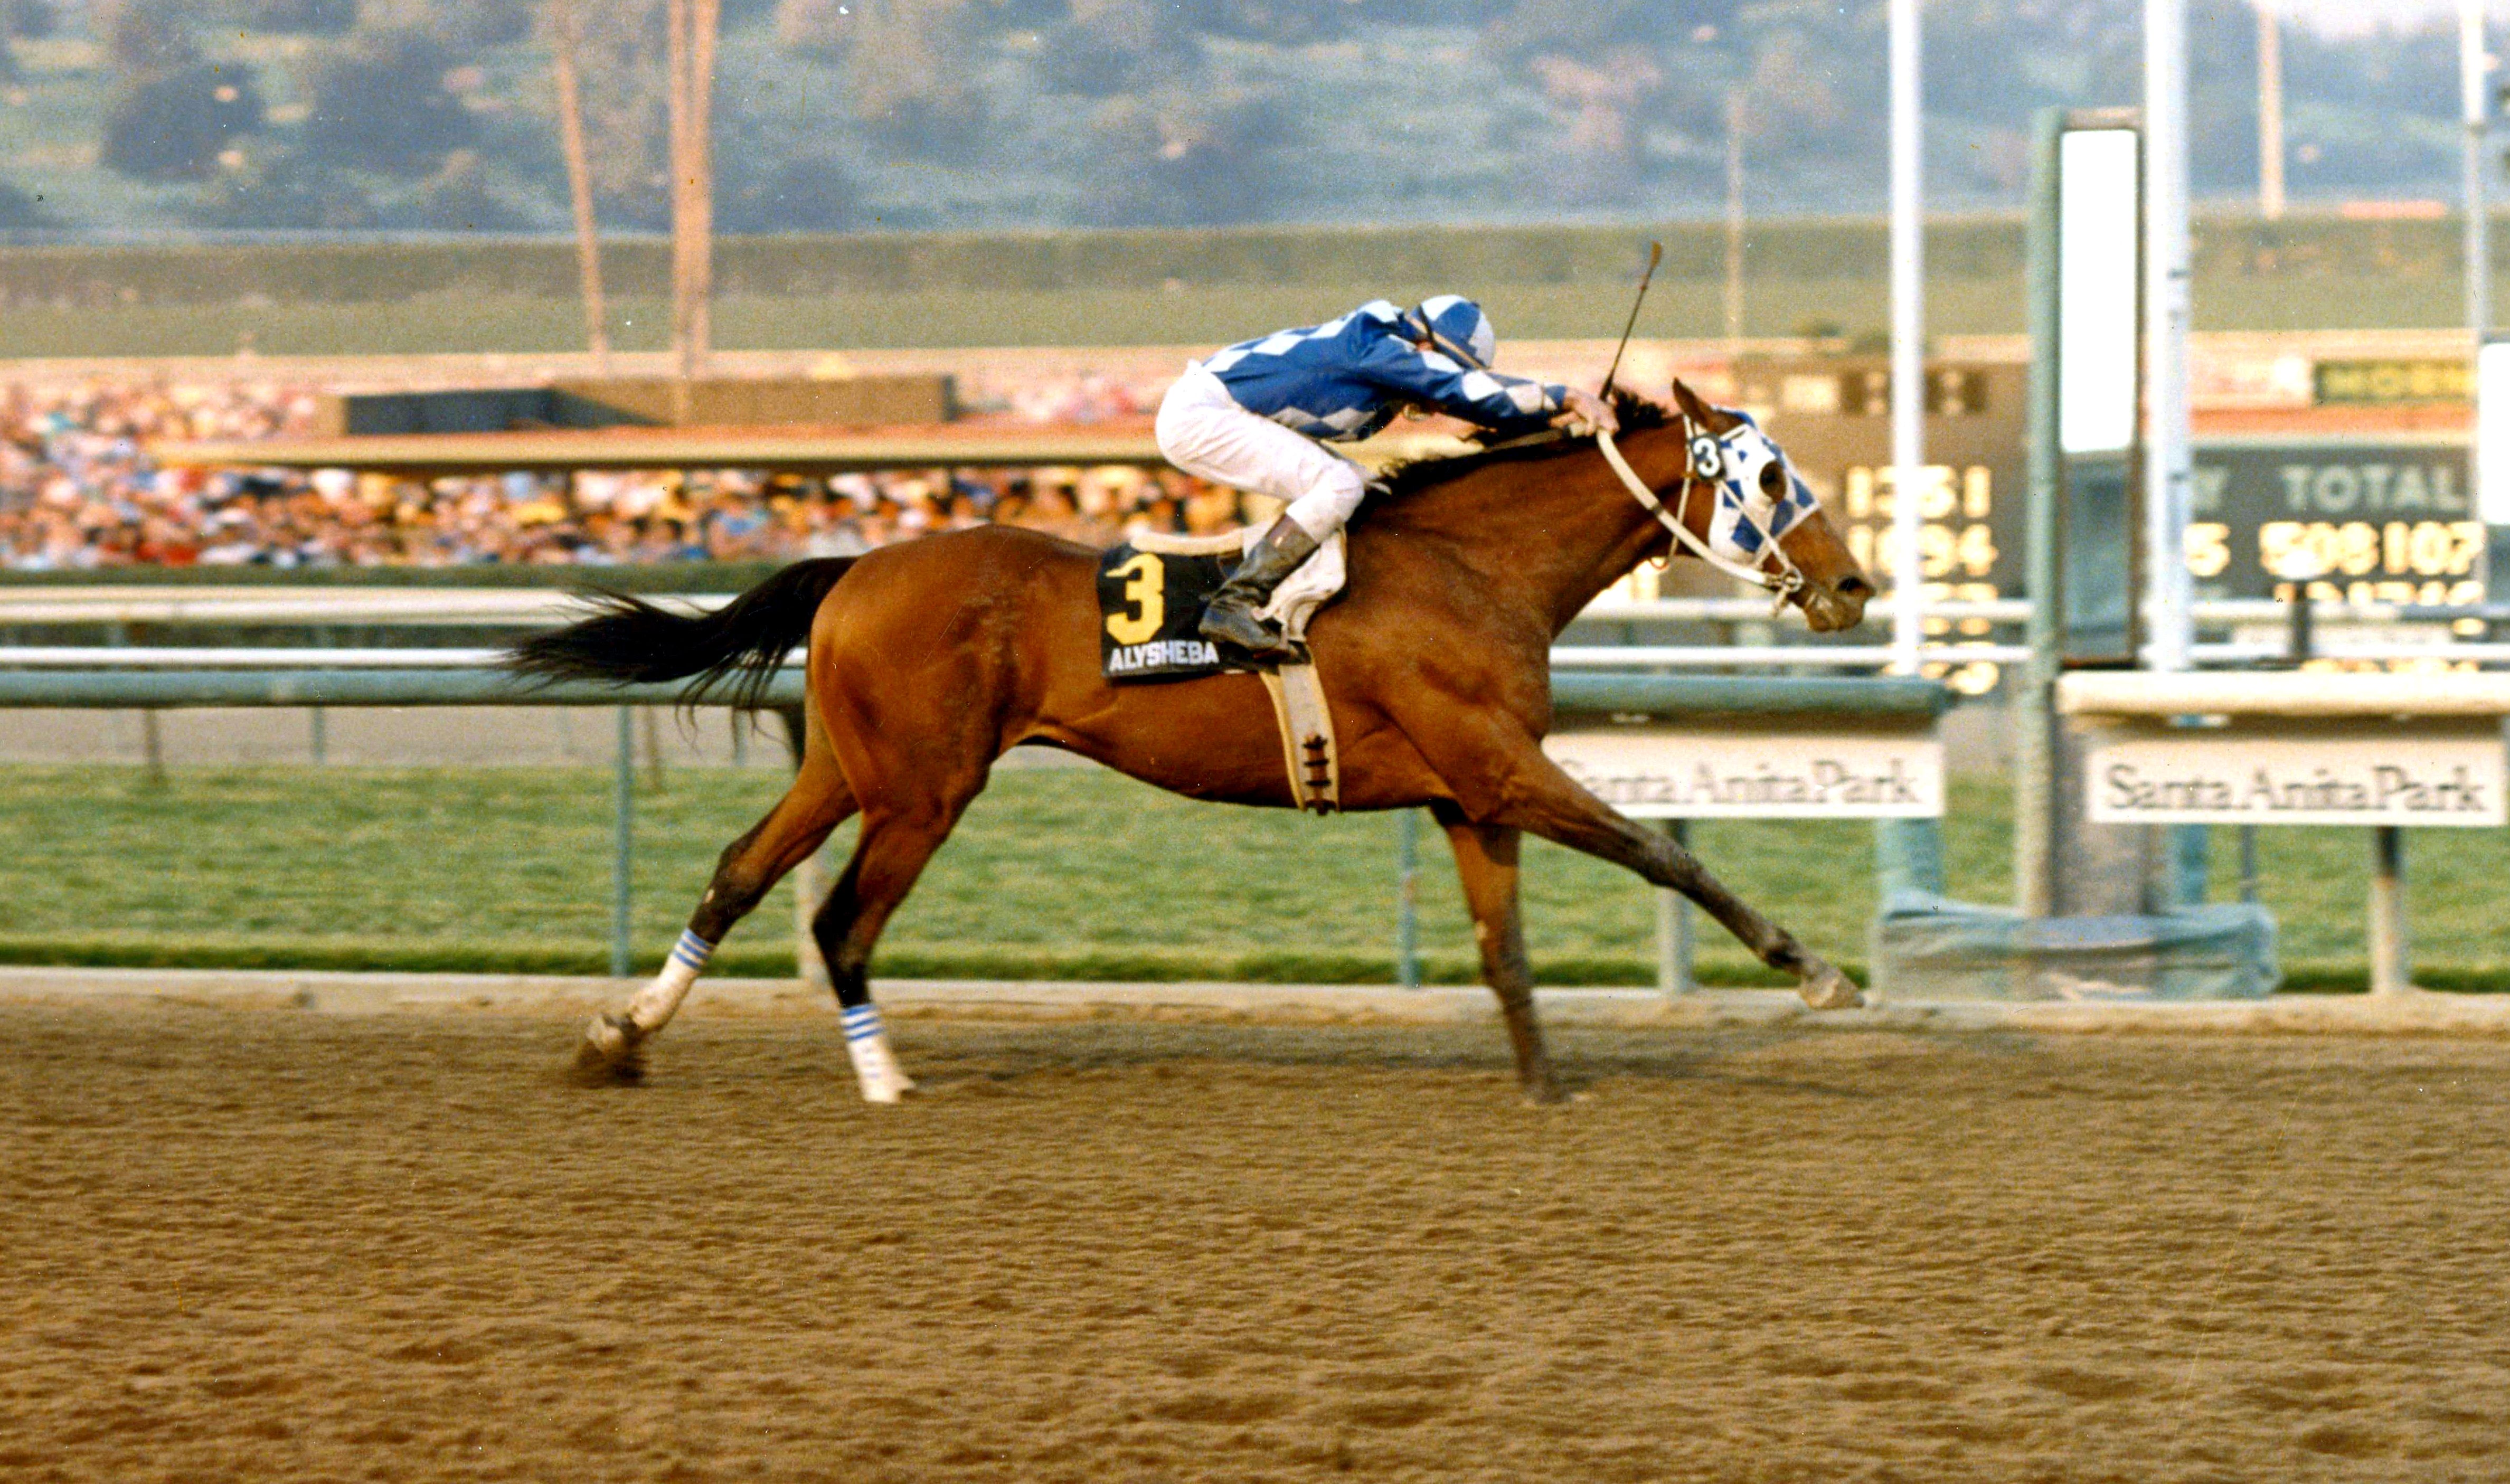 Alysheba (Chris McCarron up) wins the 1988 Charles H. Strub Stakes at Santa Anita (Santa Anita Photo/Museum Collection)